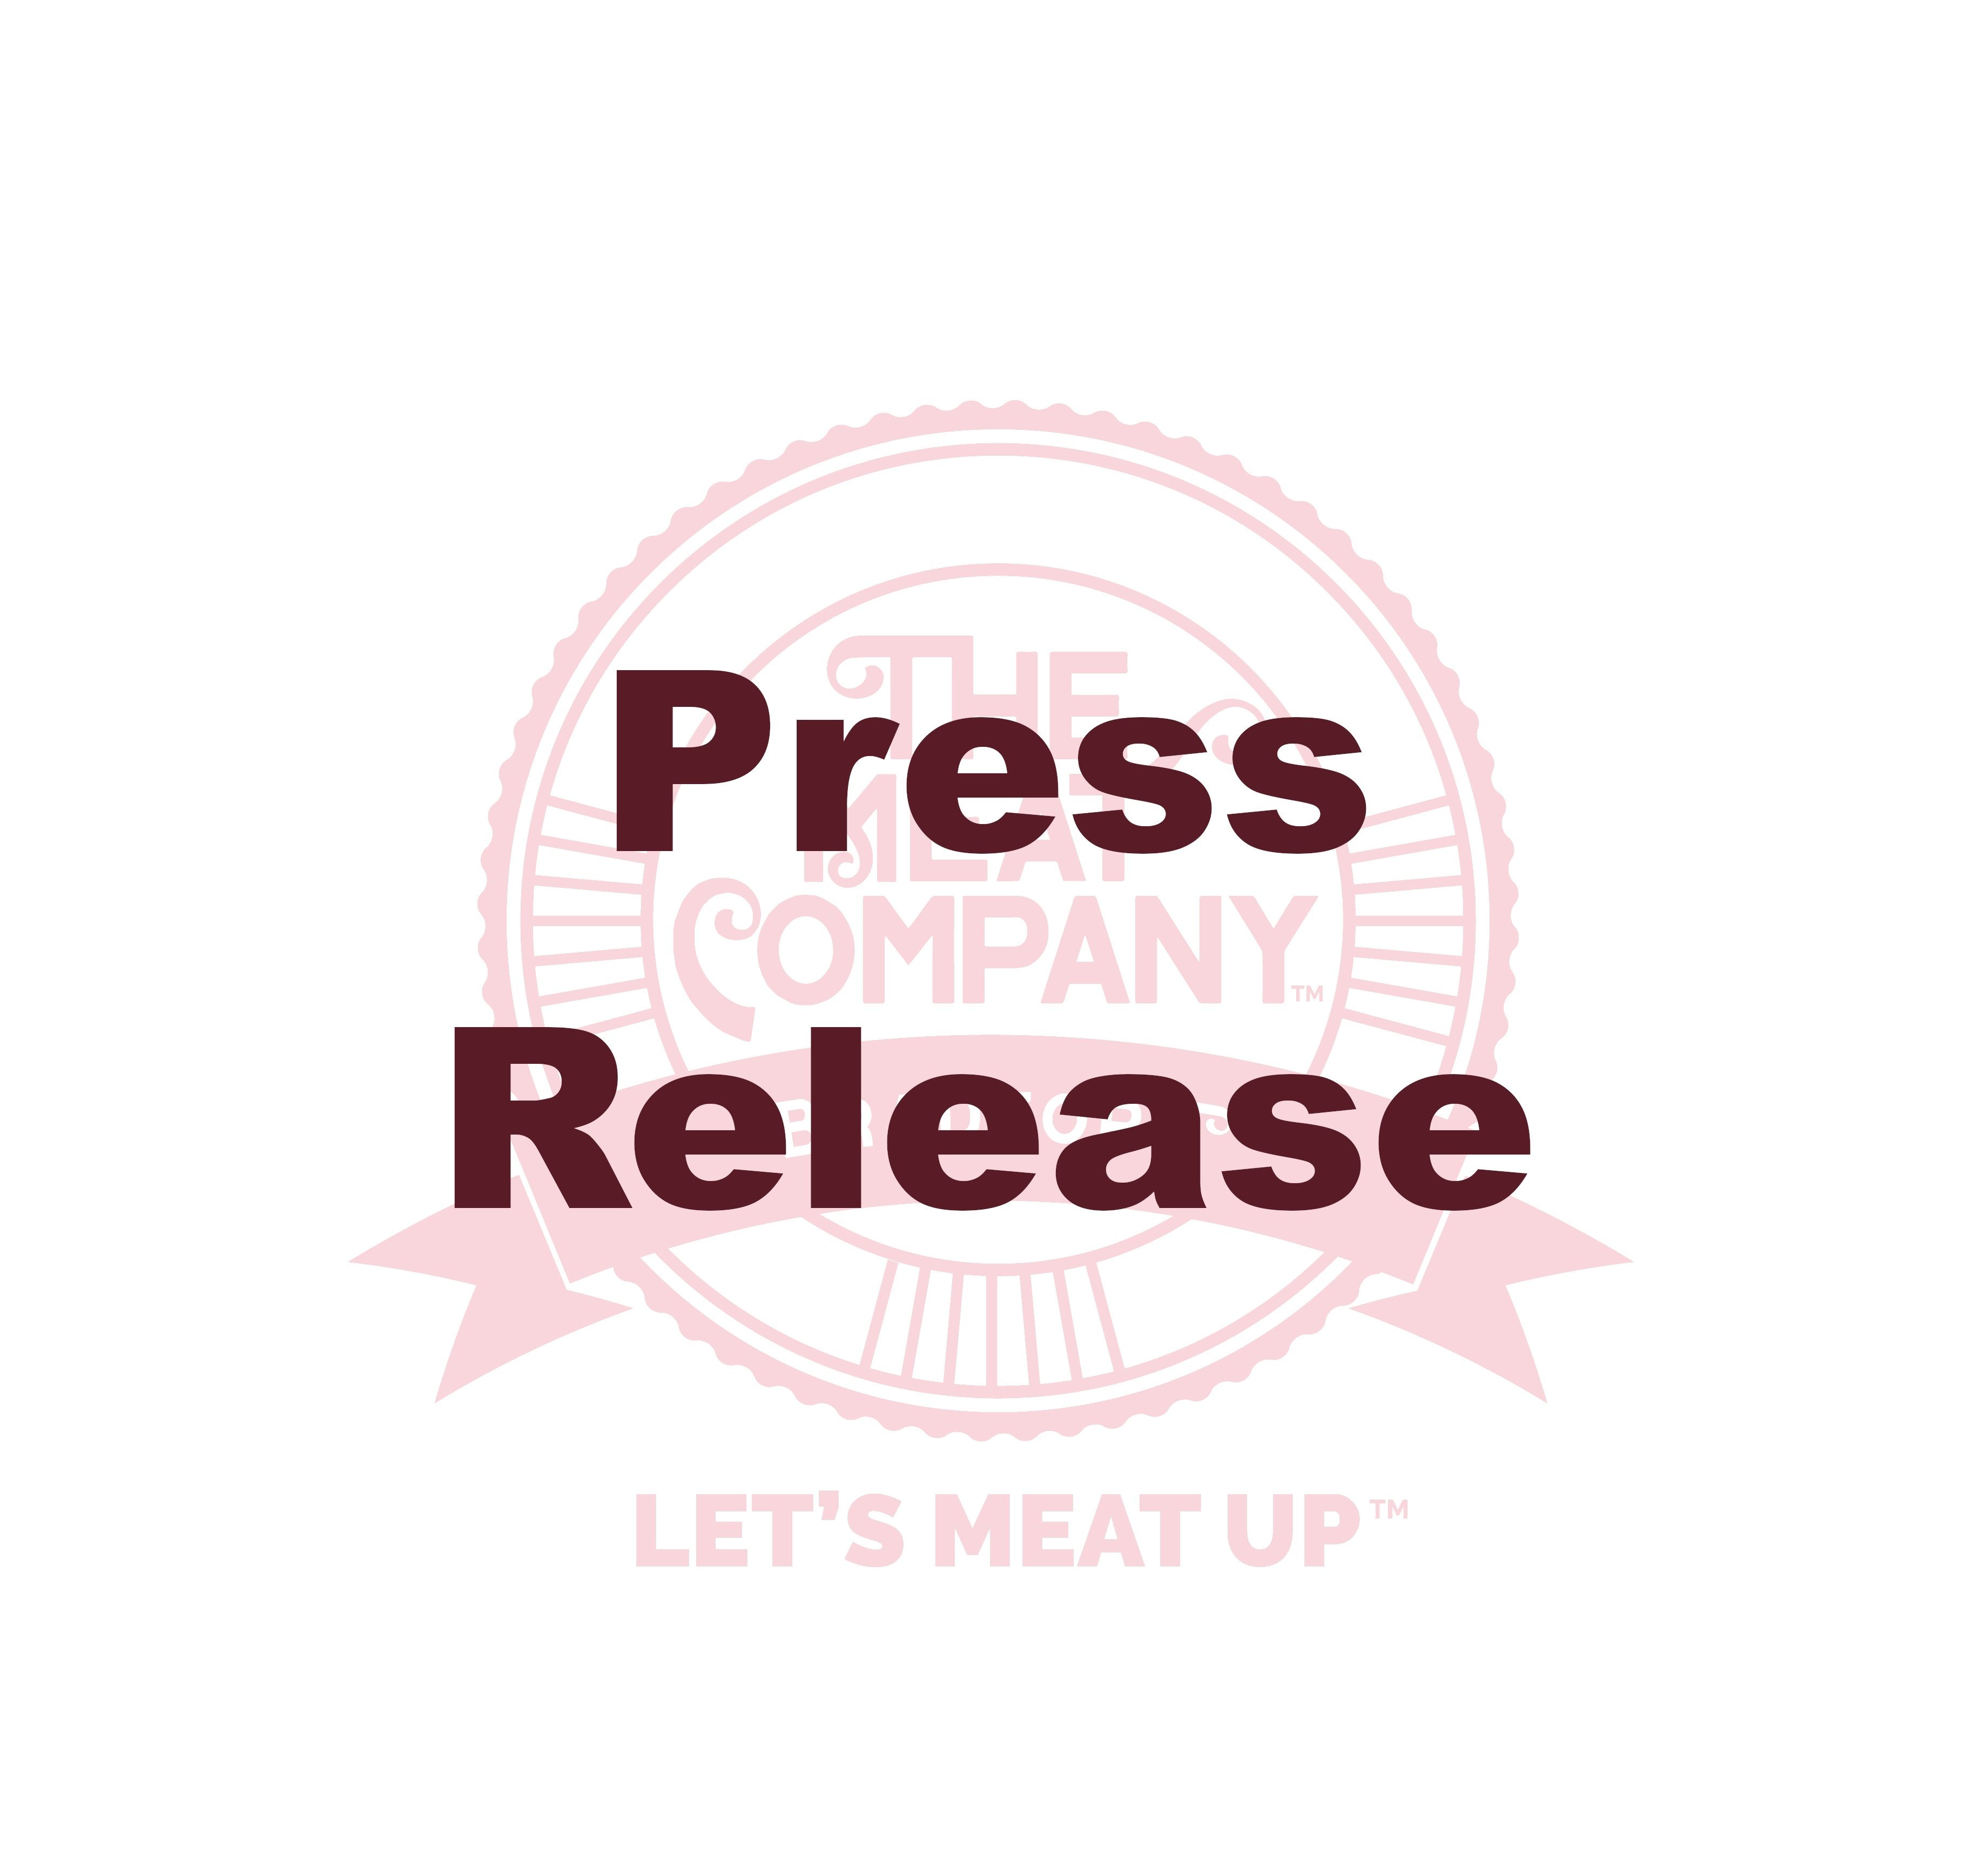 Coronavirus Press Release SaveCo Online Ltd